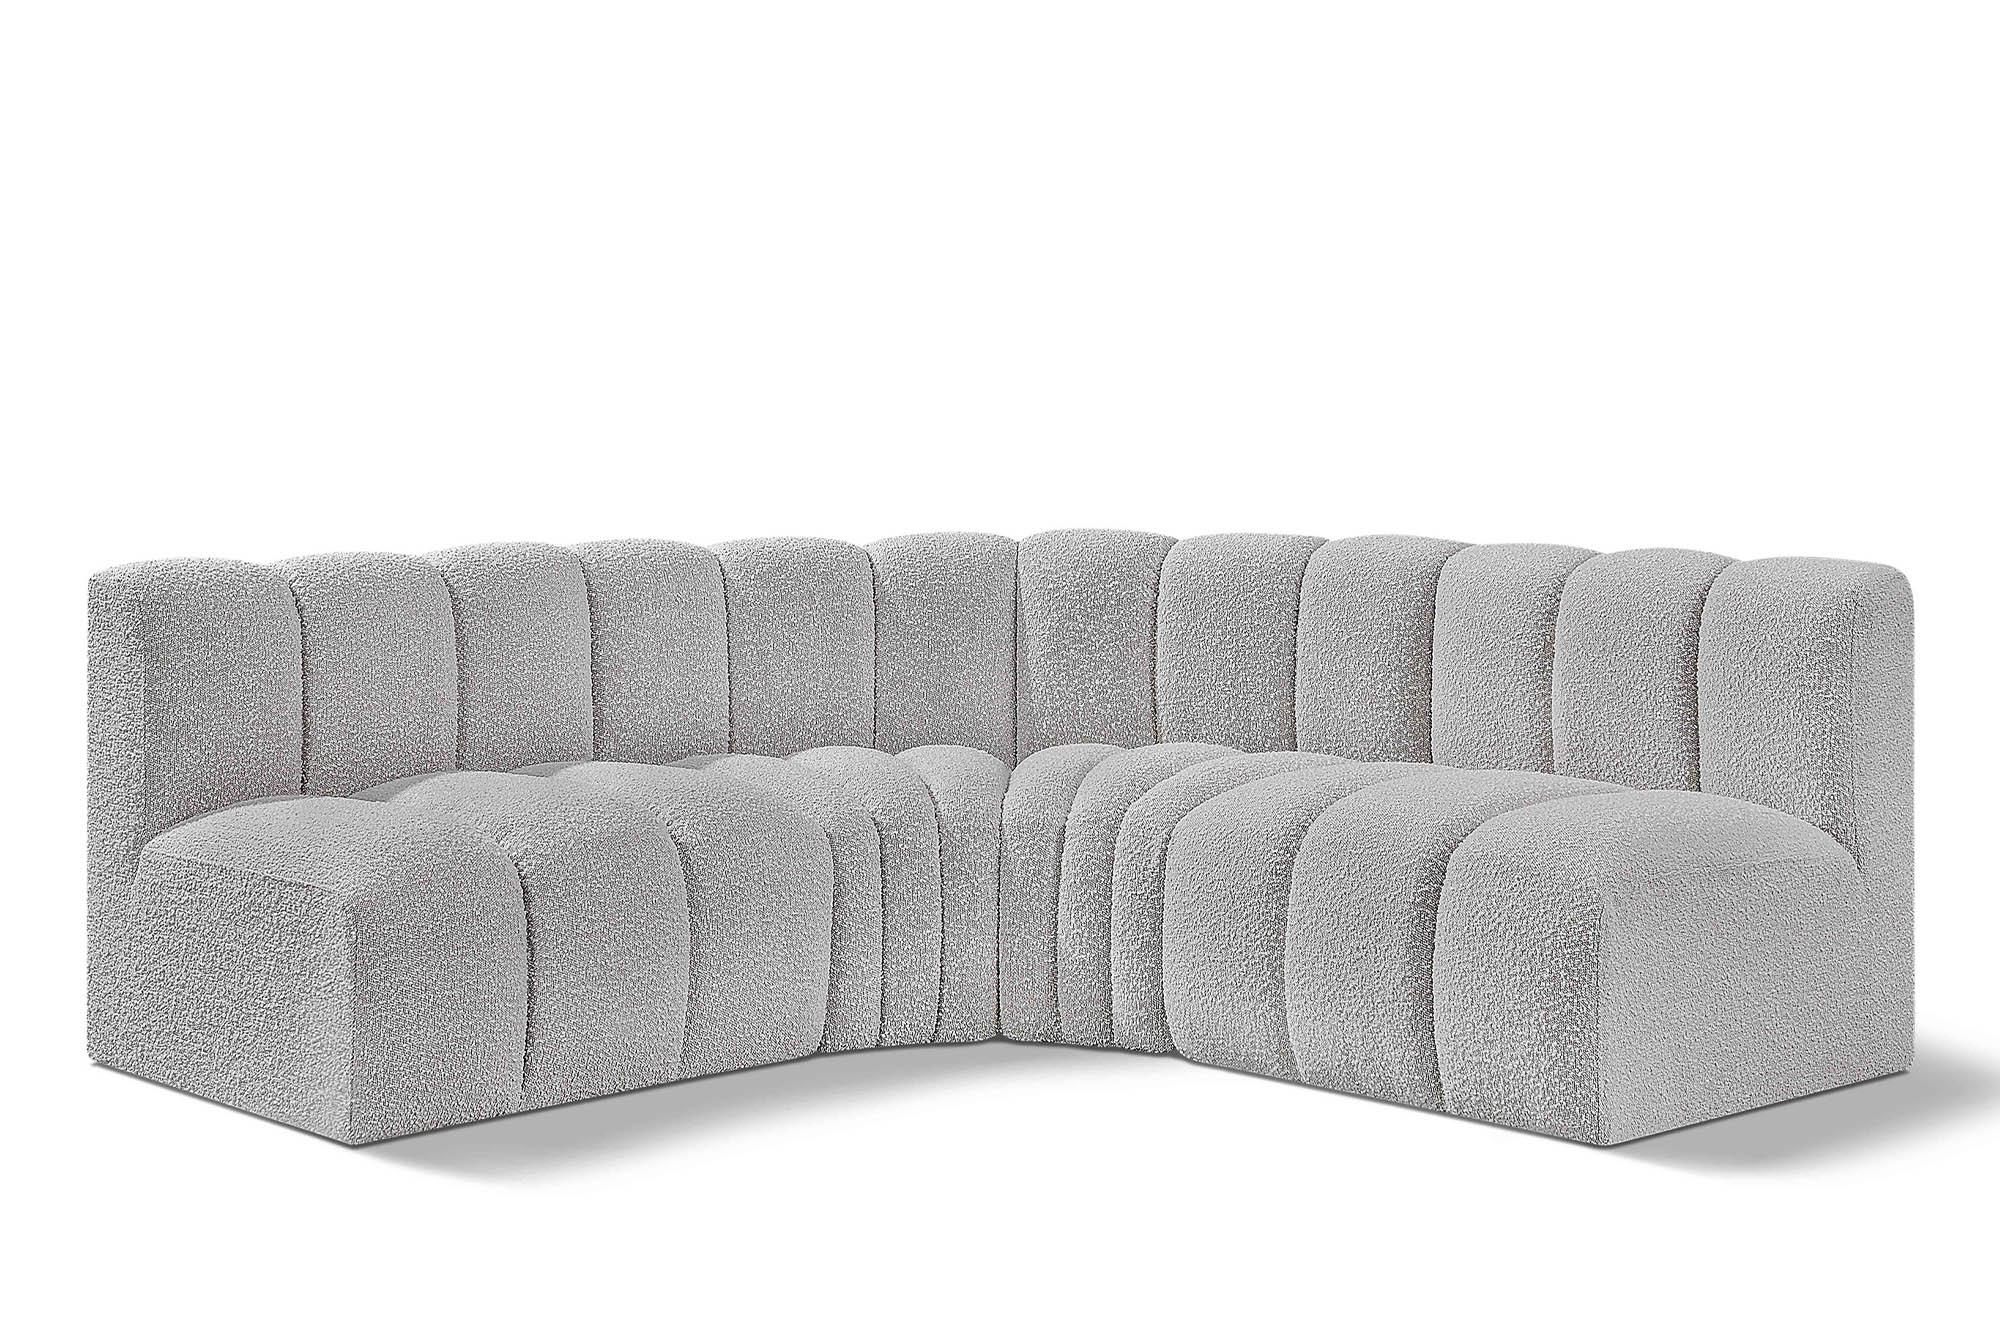 Contemporary, Modern Modular Sectional Sofa ARC 102Grey-S4B 102Grey-S4B in Gray 